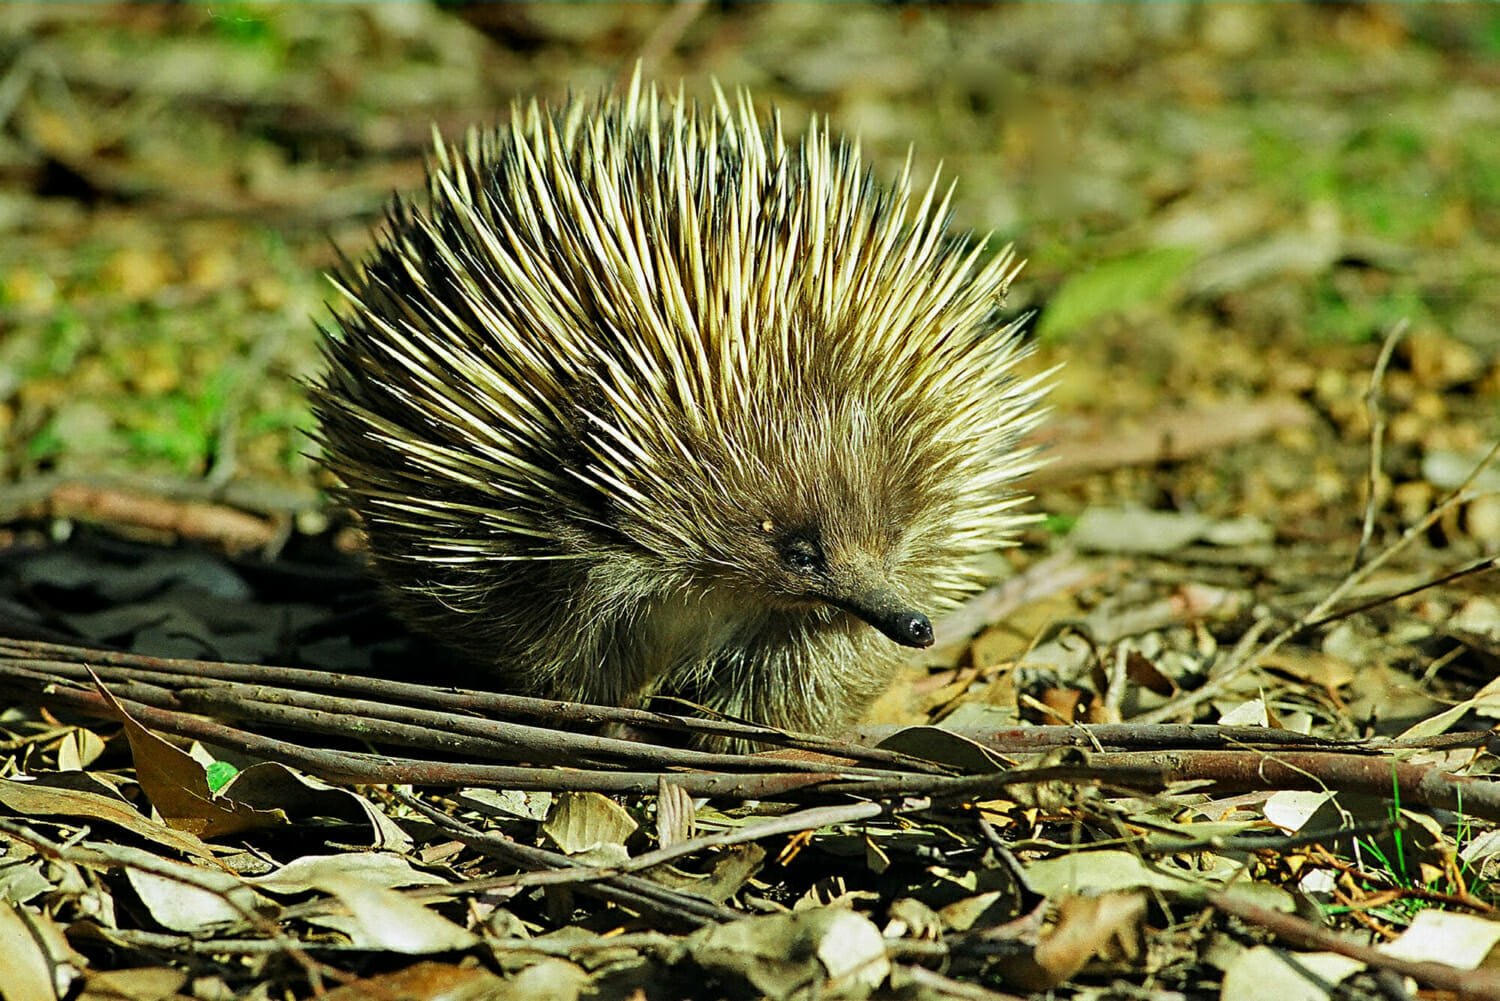 Sydney Animals – Where to See Australian Native Wildlife in Sydney